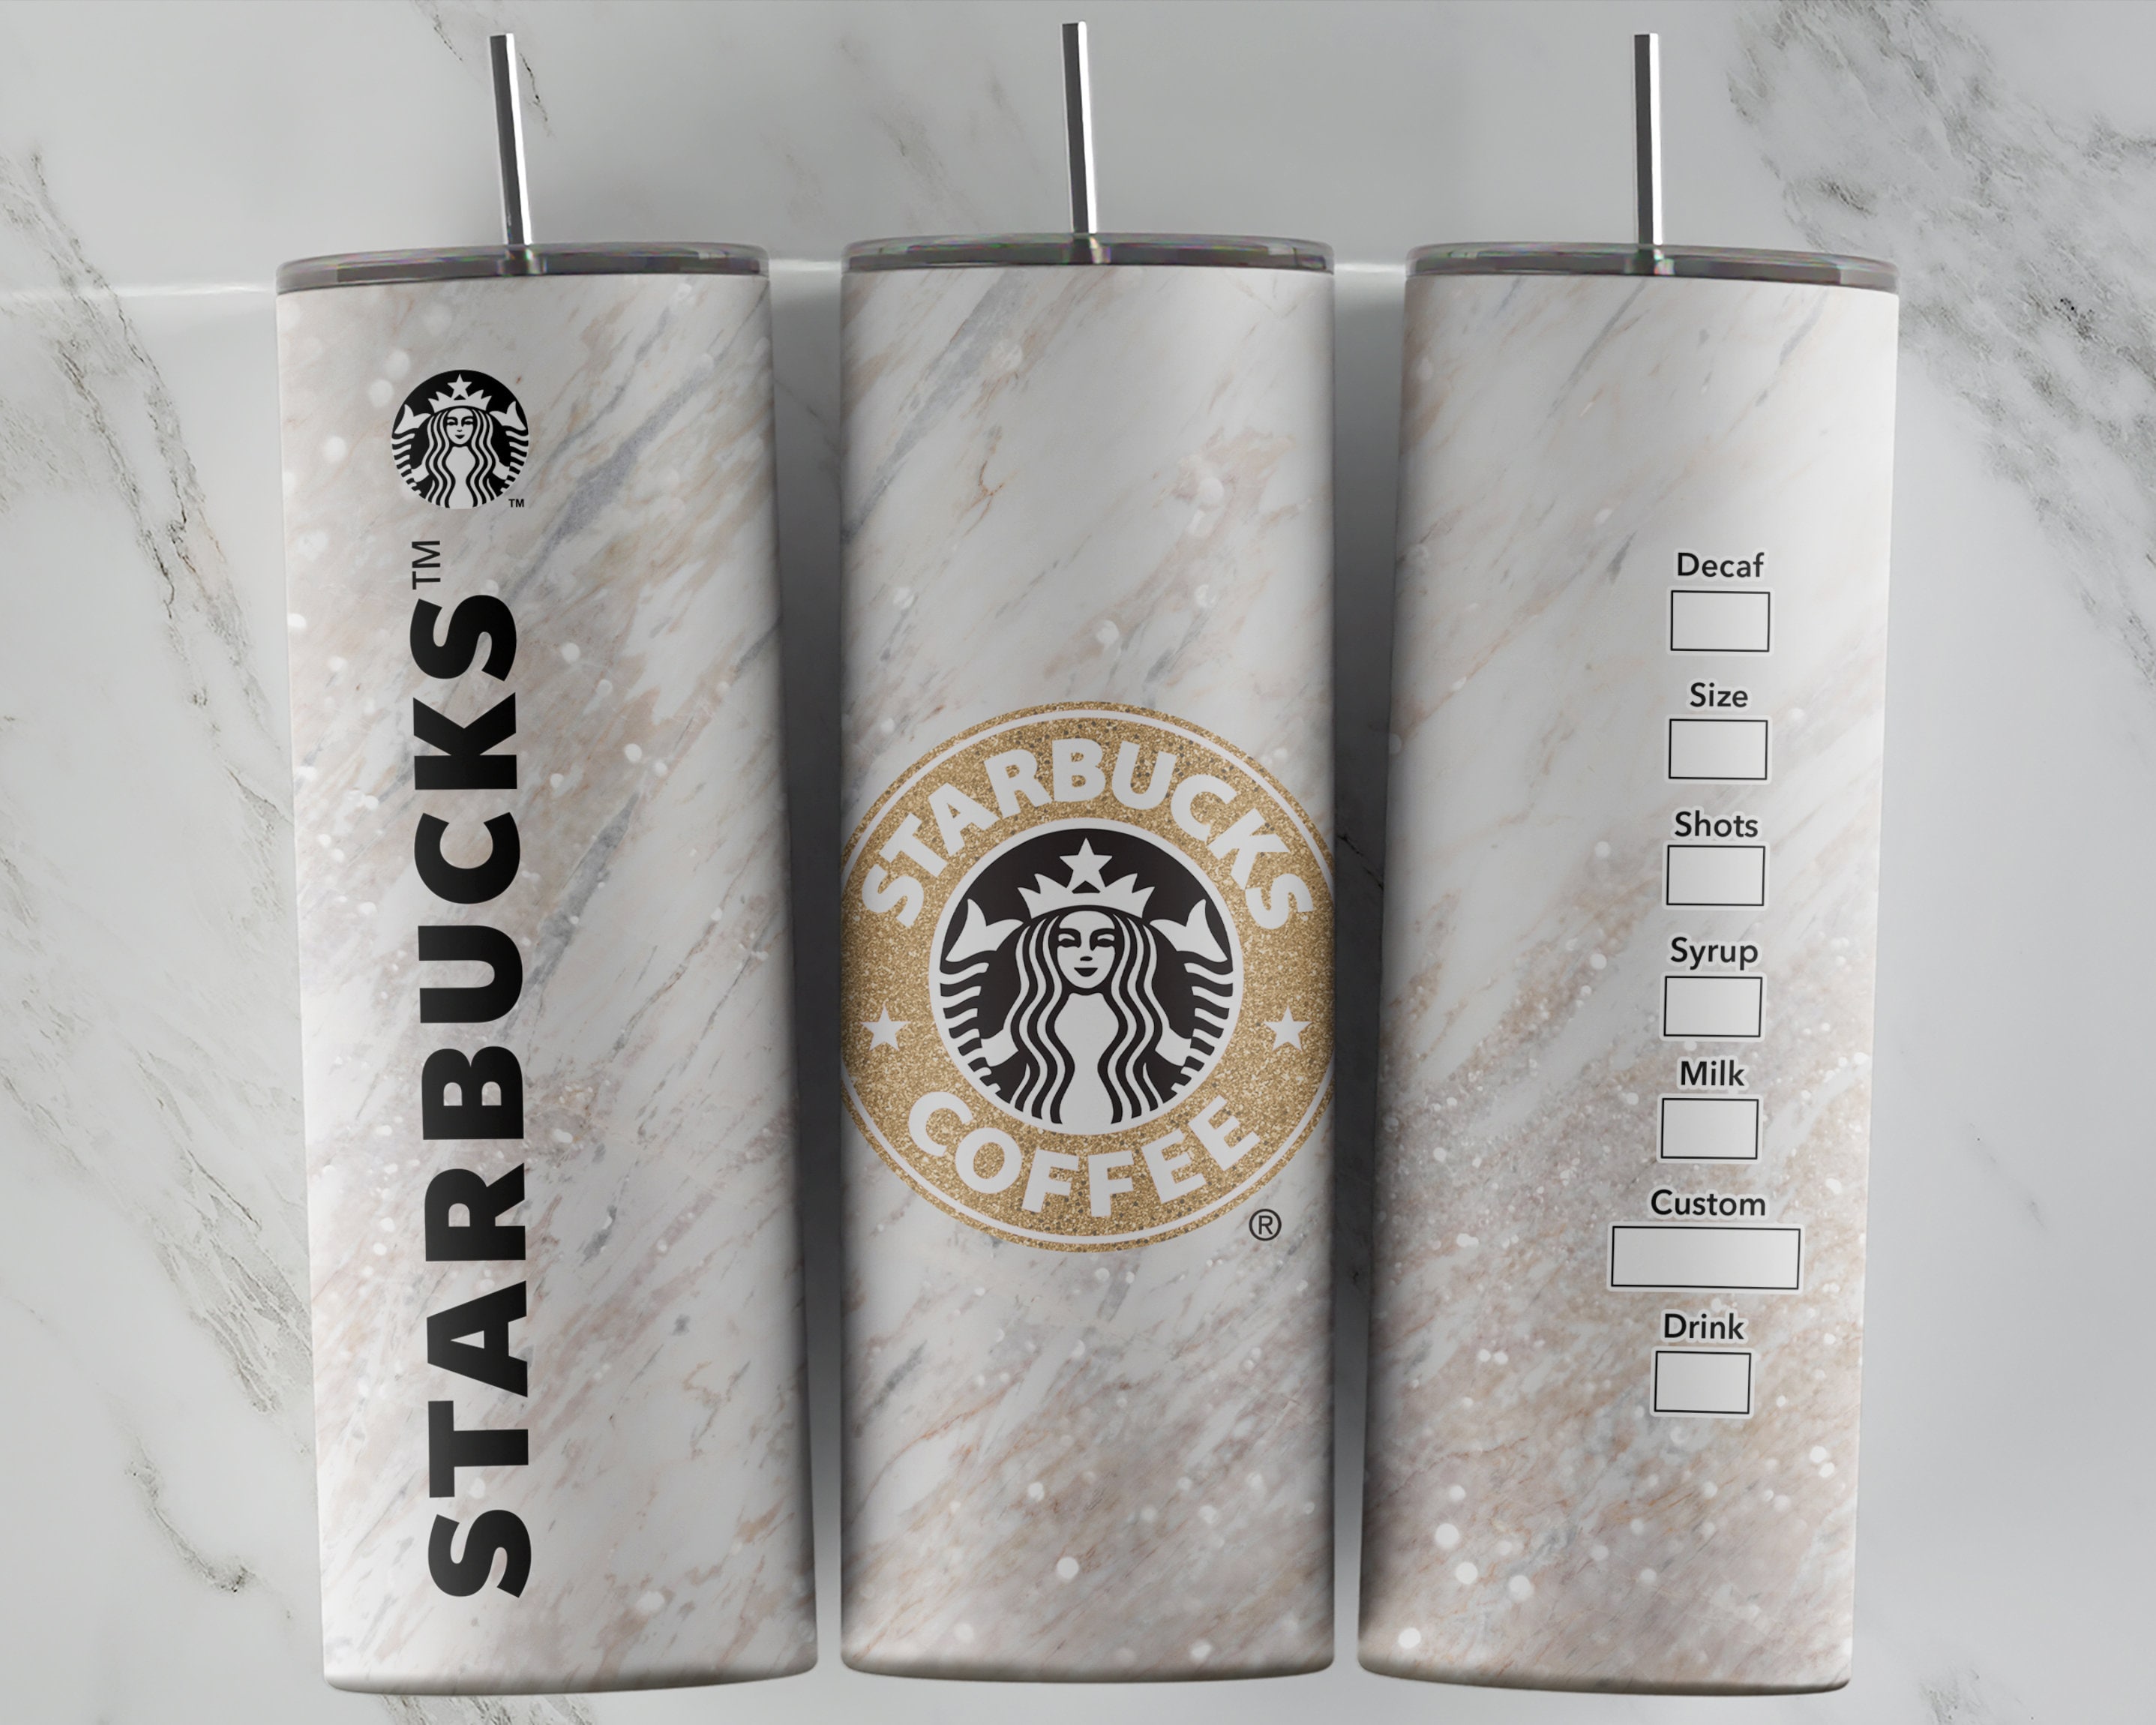 Starbucks Sublimation Tumbler Design With Sunflower Border / Diseño De Vaso  De Sublimación De Starbucks Con Borde De Girasol 